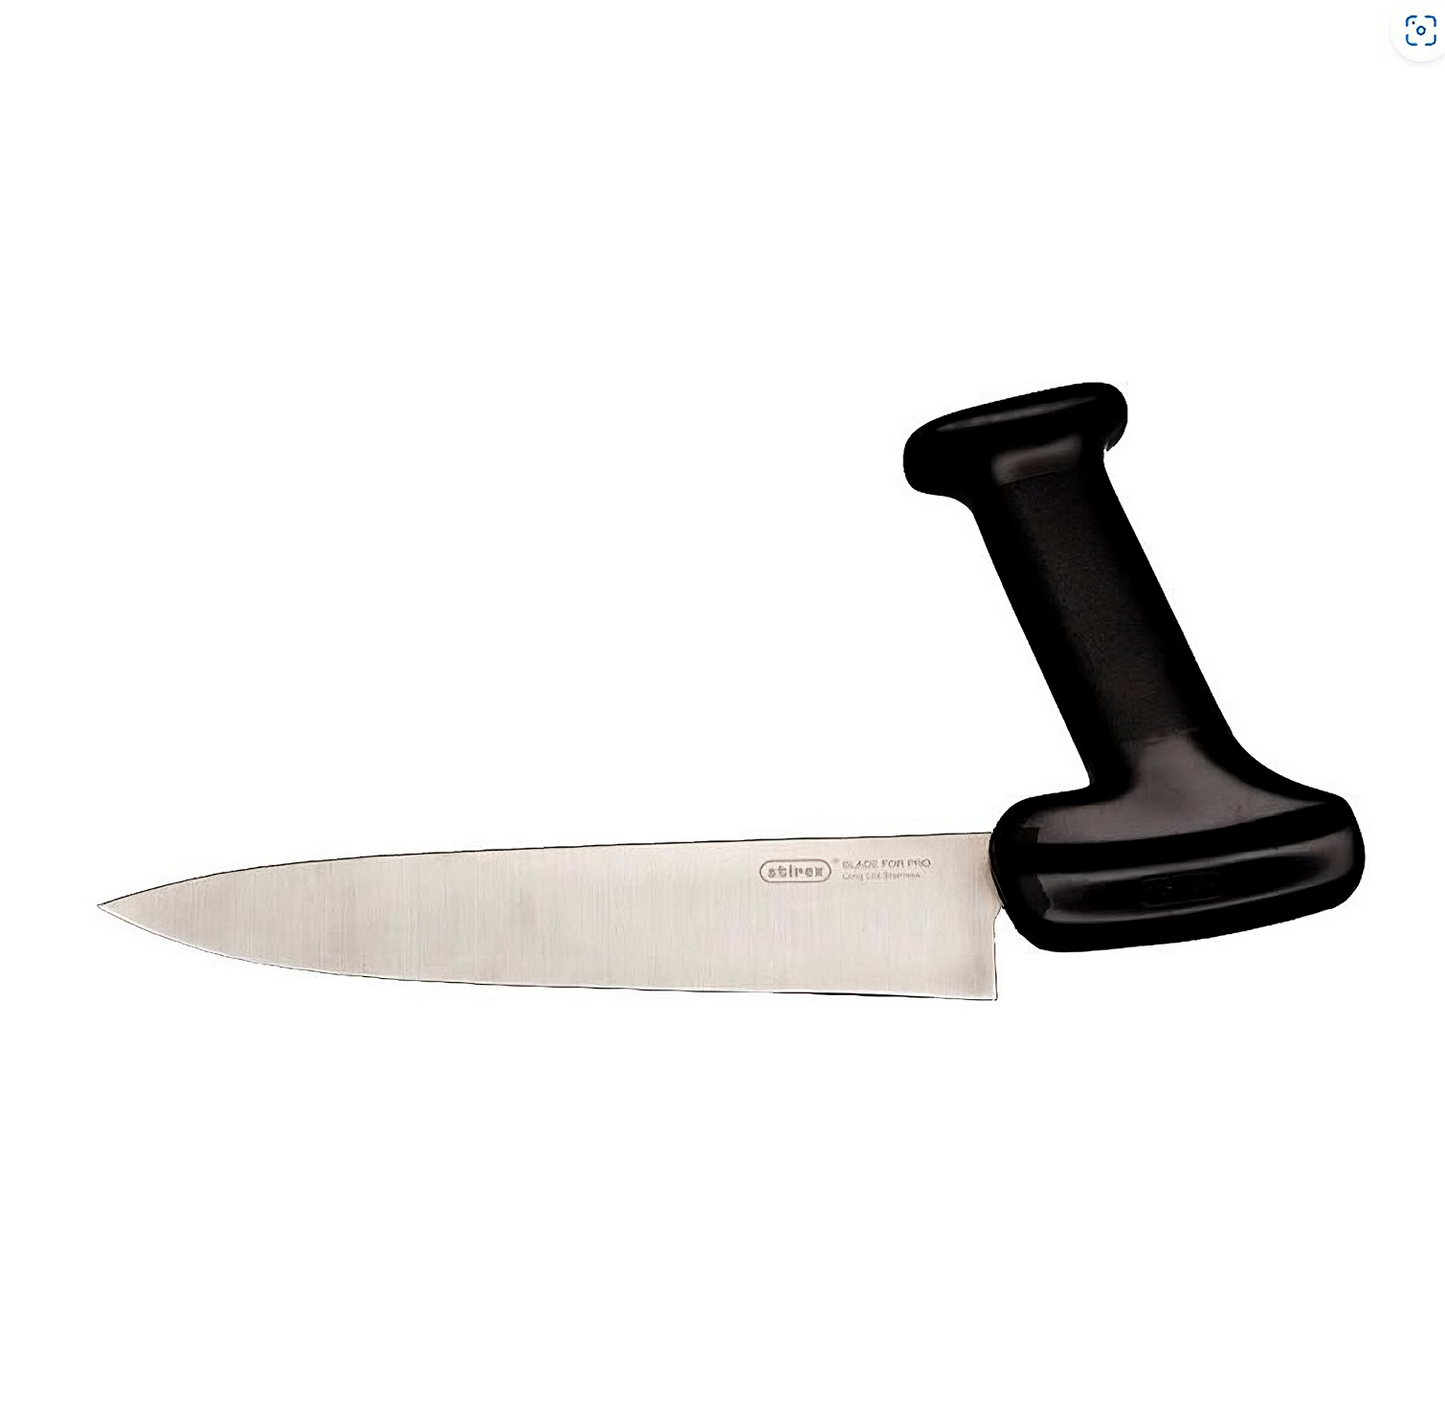 Stirex Swedish Chef Knife